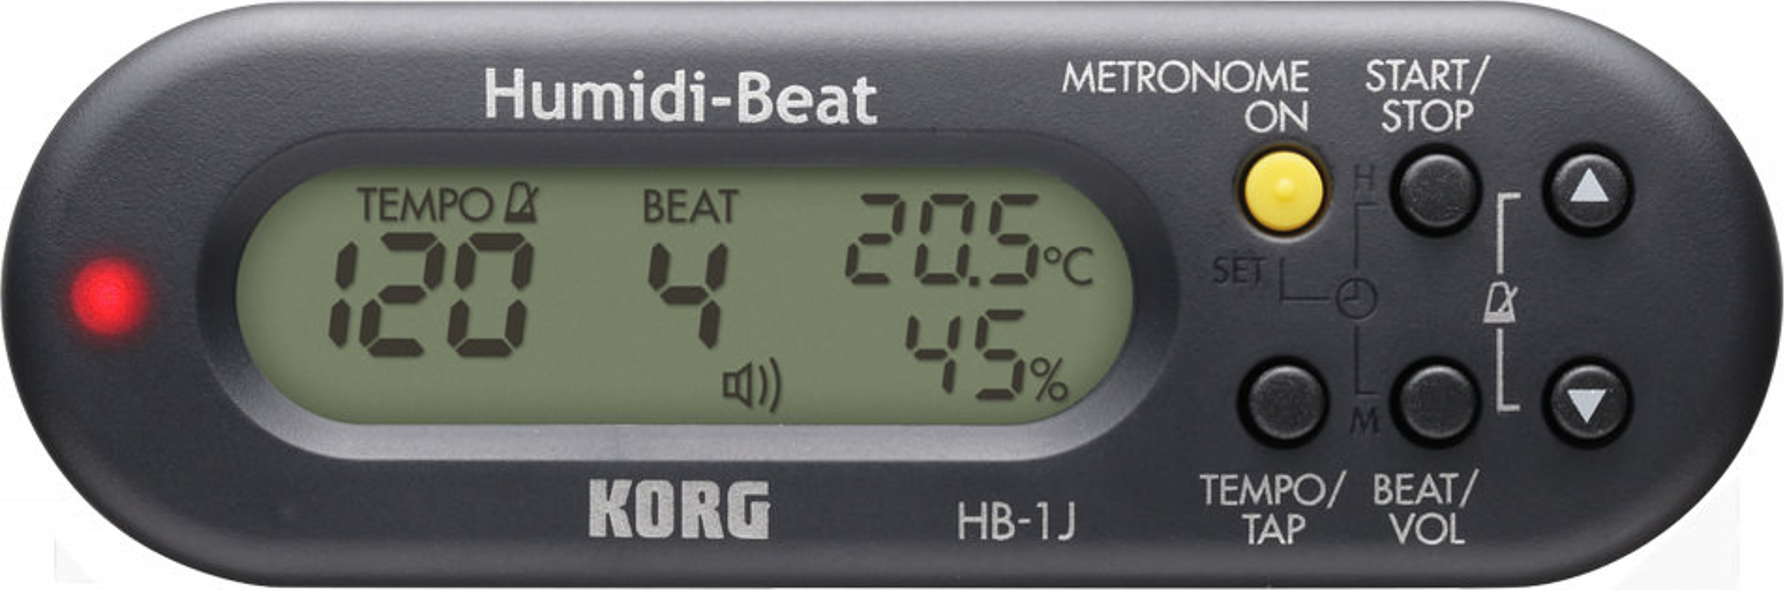 Korg Humidi-beat Metronome With Humidity Temperature Detector Black - Afinador de guitarra - Main picture